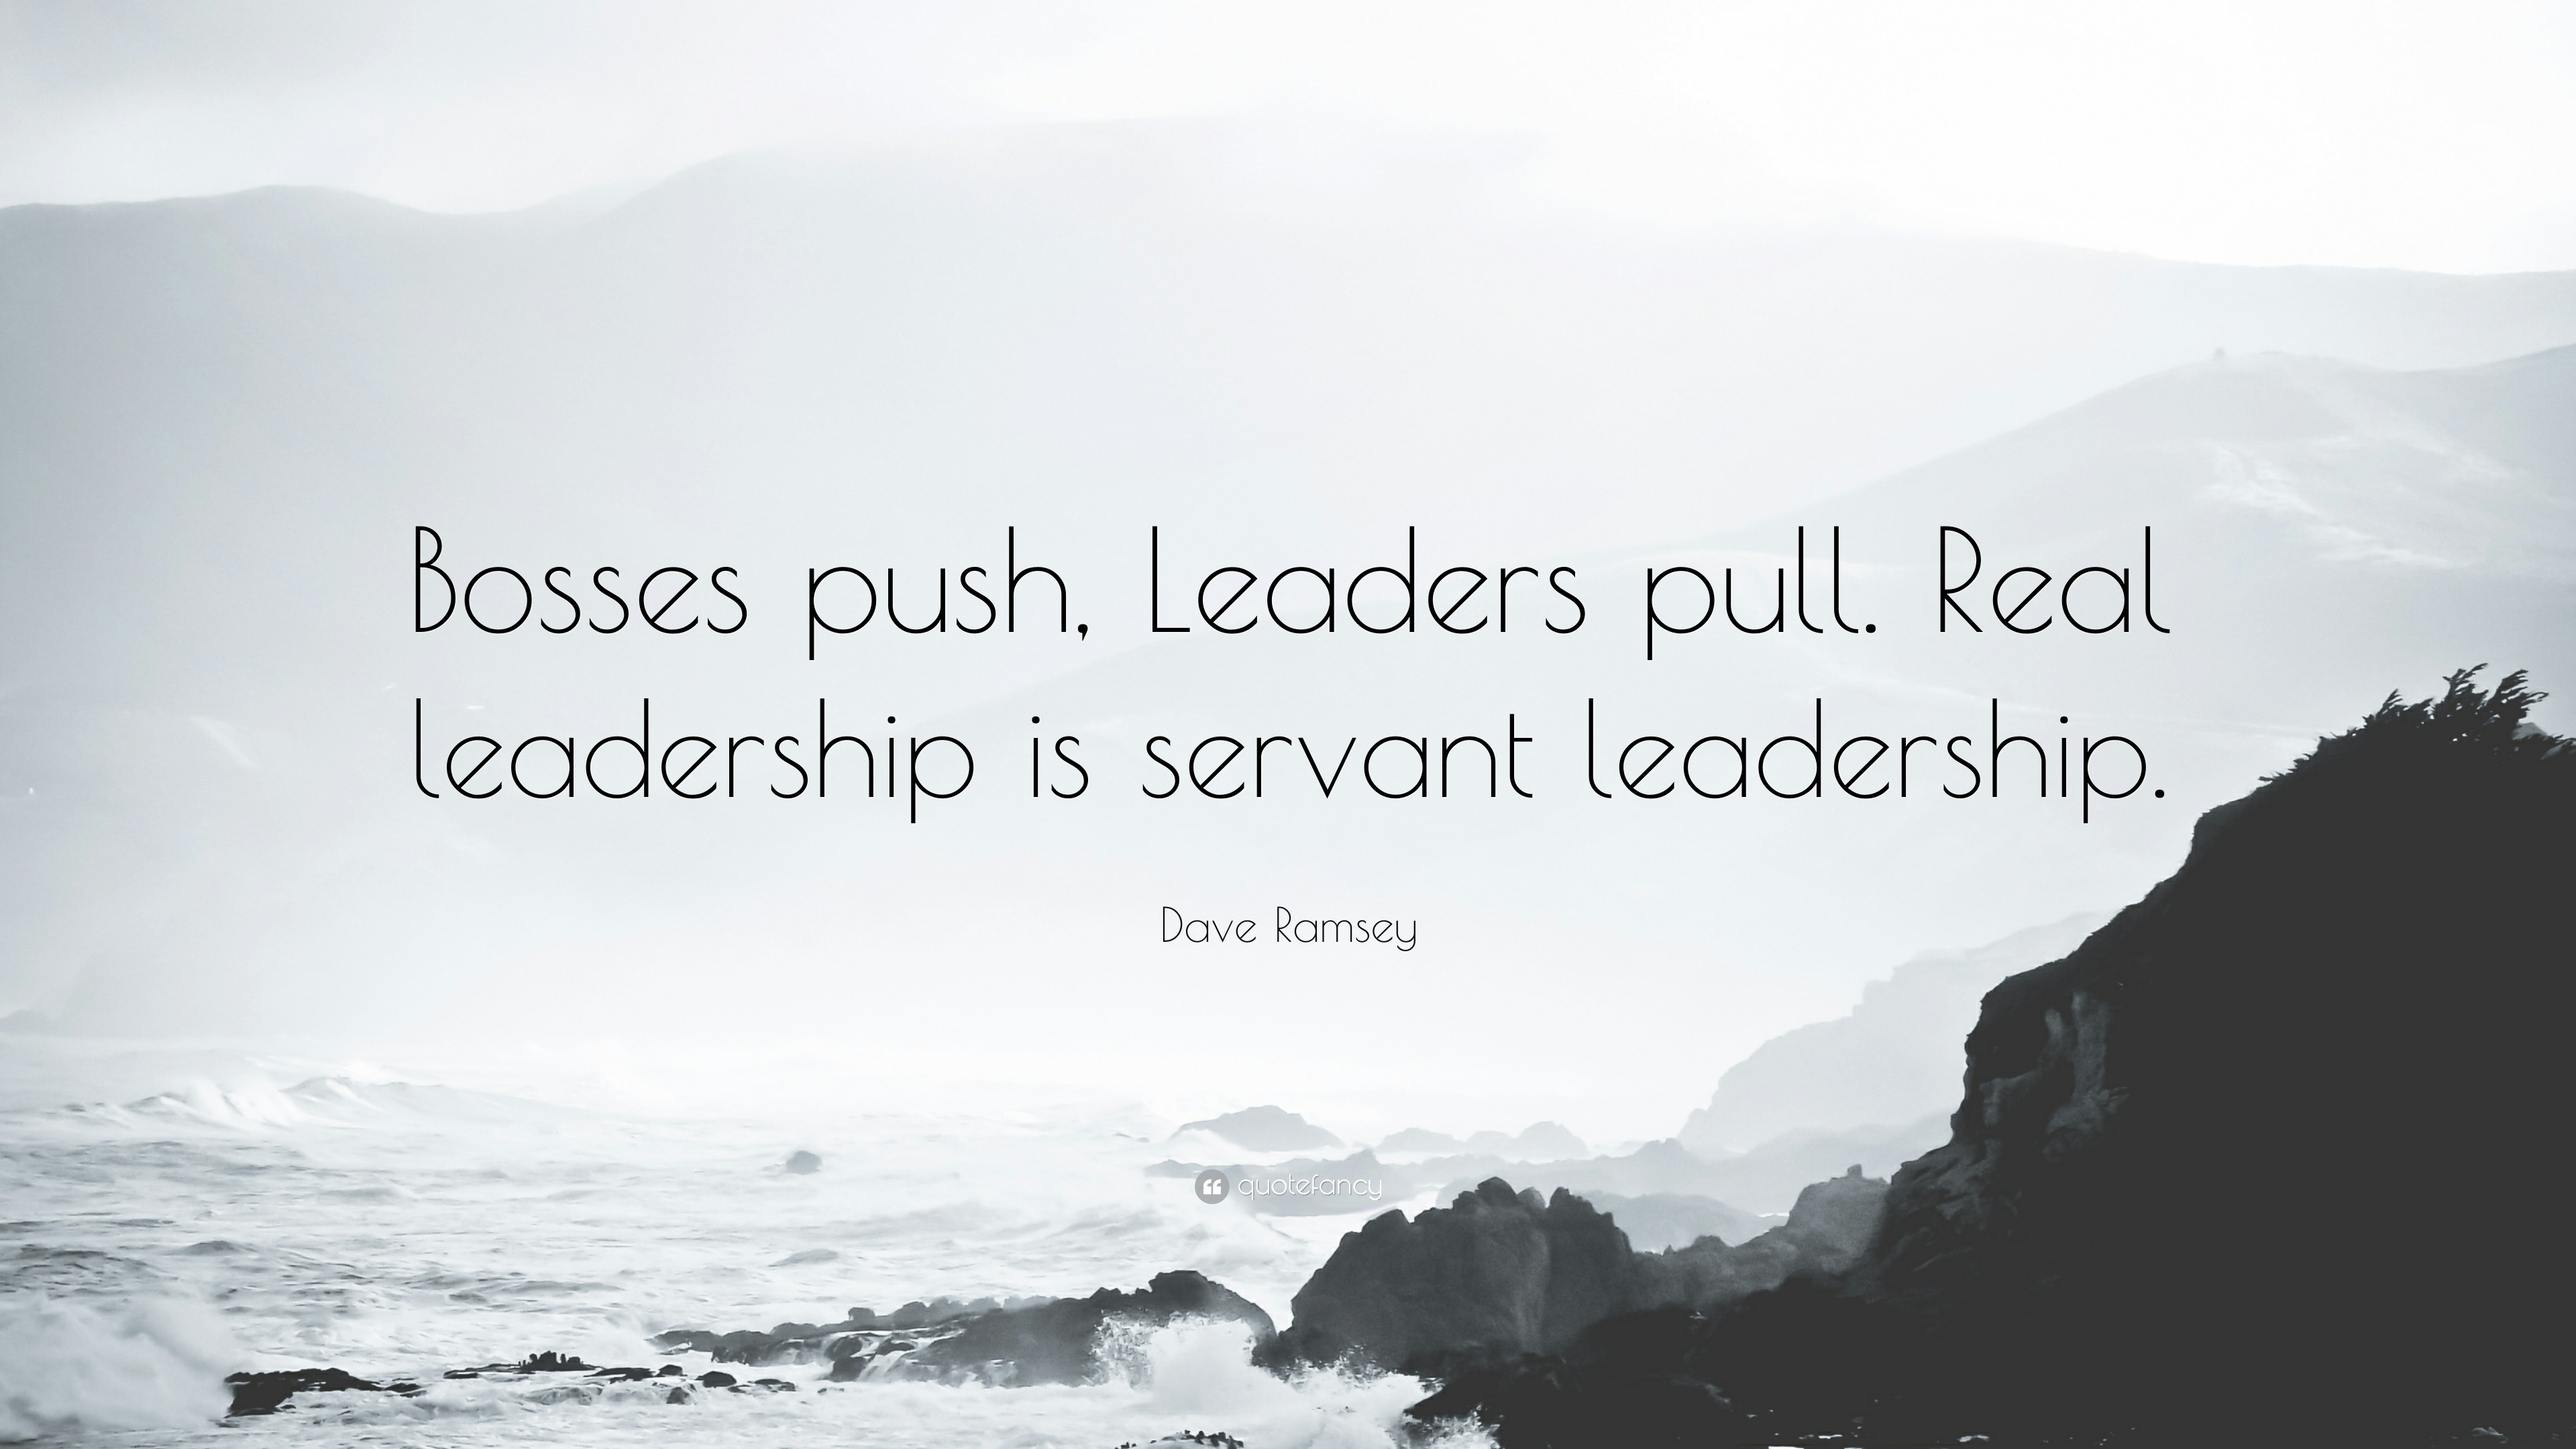 Dave Ramsey Quote: “Bosses push, Leaders pull. Real leadership is servant  leadership.”